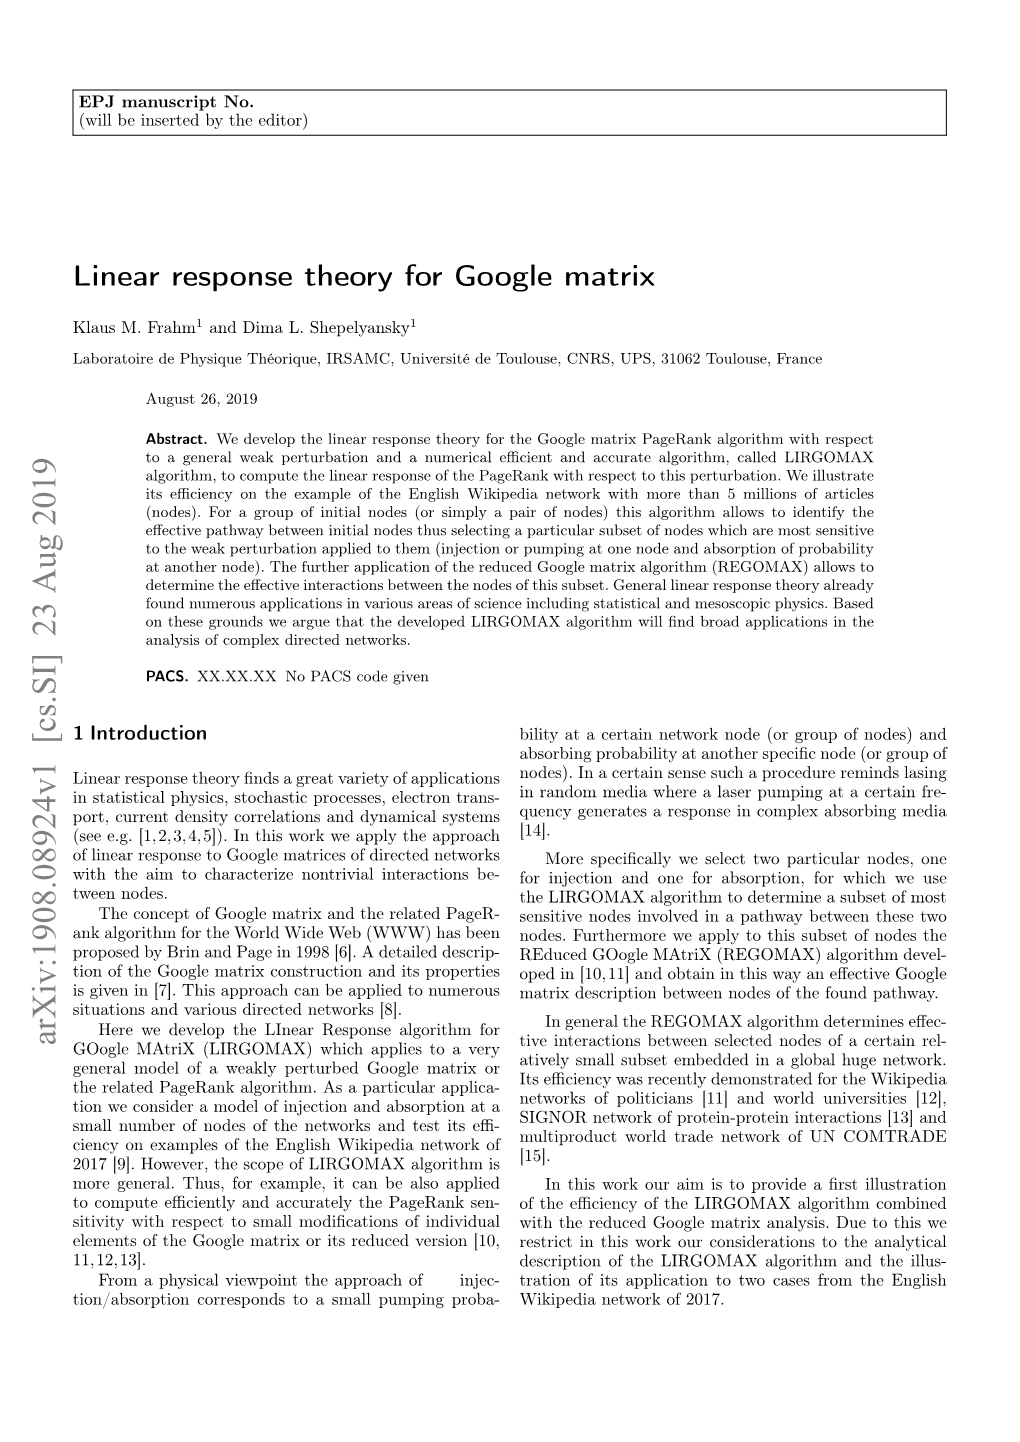 Linear Response Theory for Google Matrix